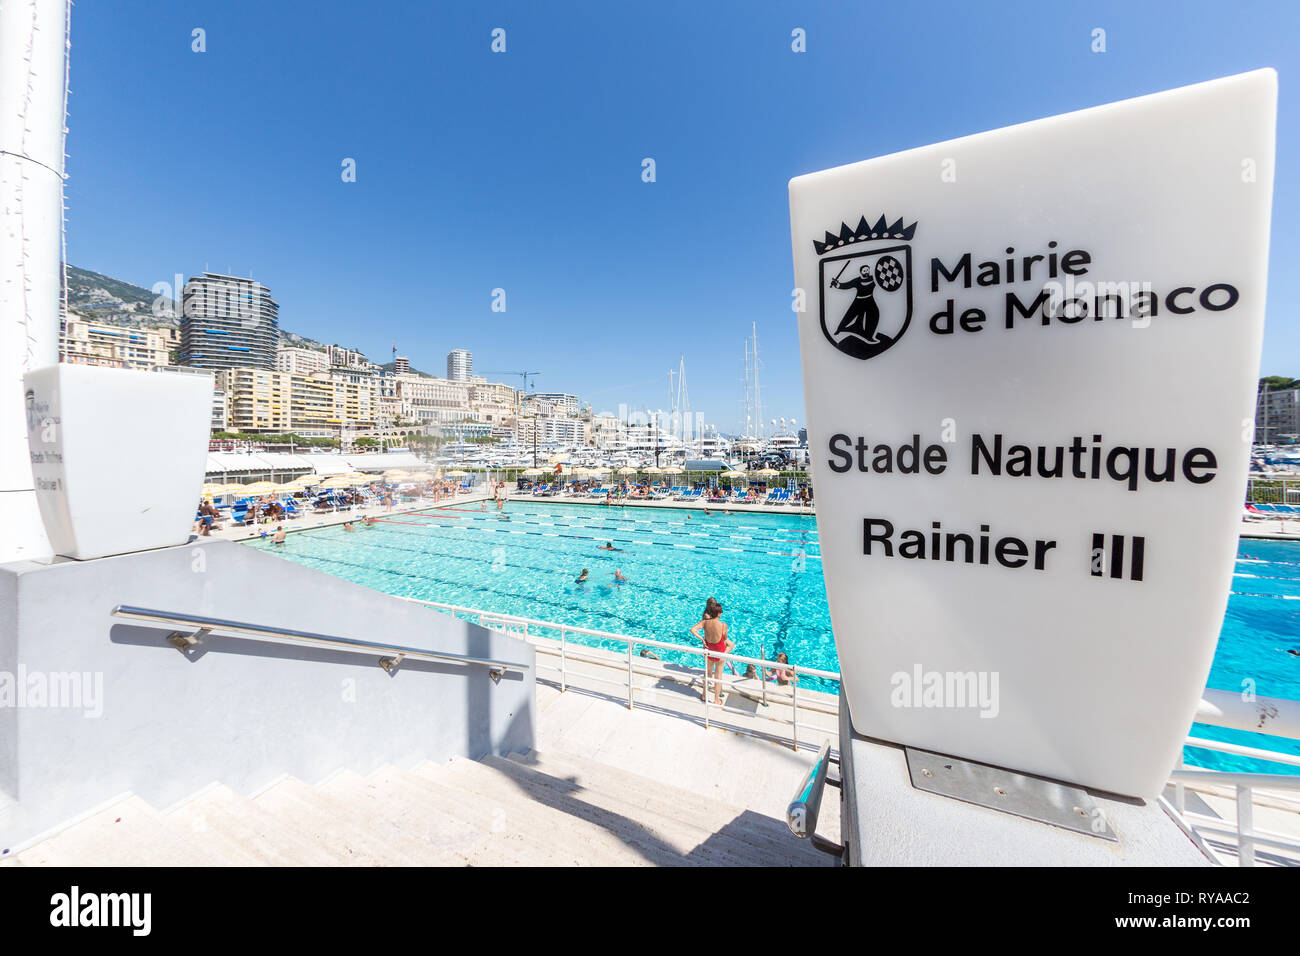 Schwimmbad im Hafen mit Schild 'Mairie de Monaco. Stade Nautique Rainier III' in Monte Carlo, Monaco Stock Photo